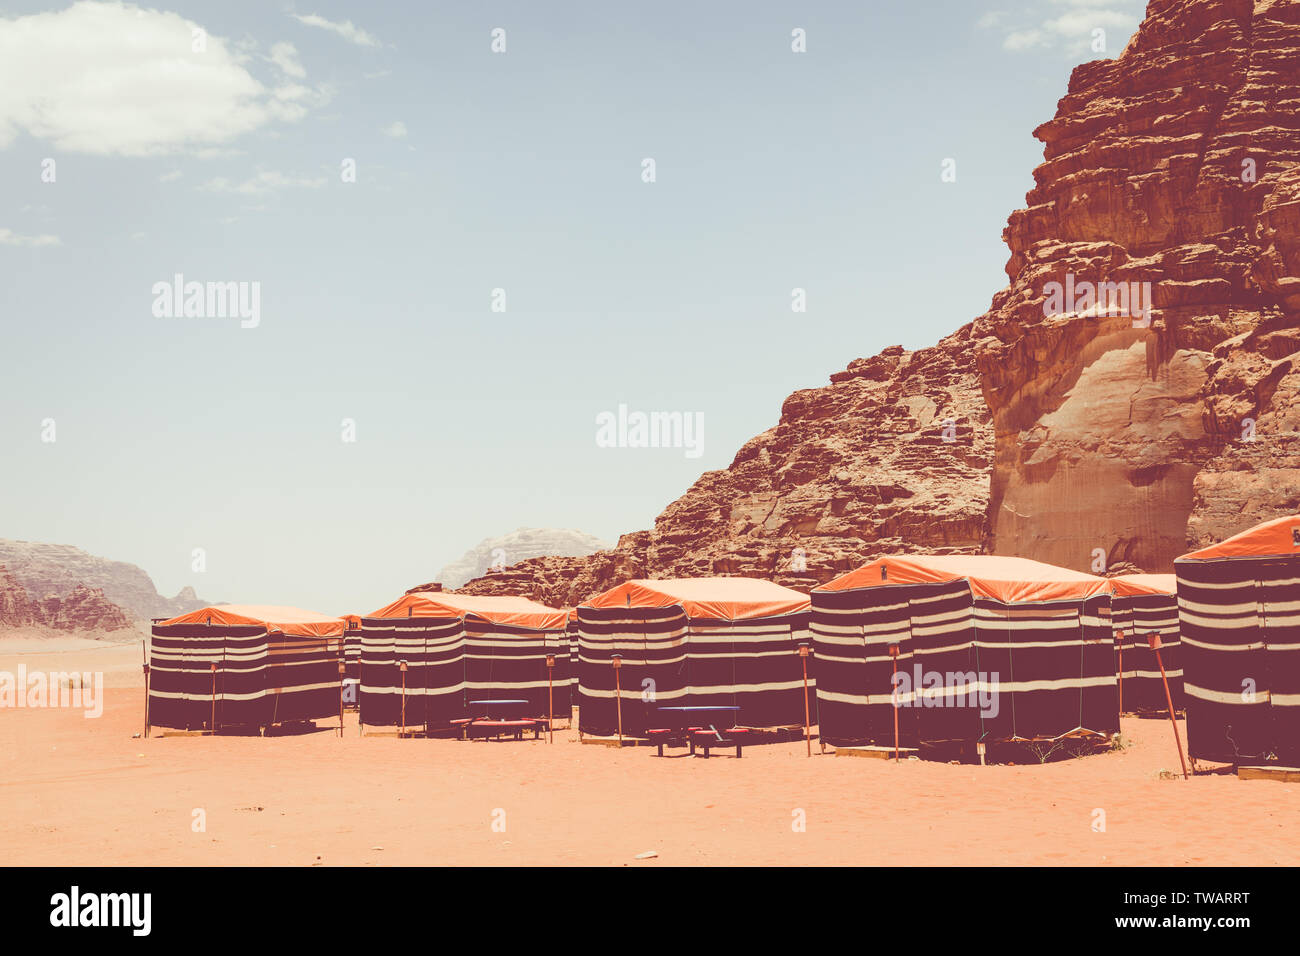 Tourist tents in Wadi Rum dessert. Jordan. Middle East. Stock Photo